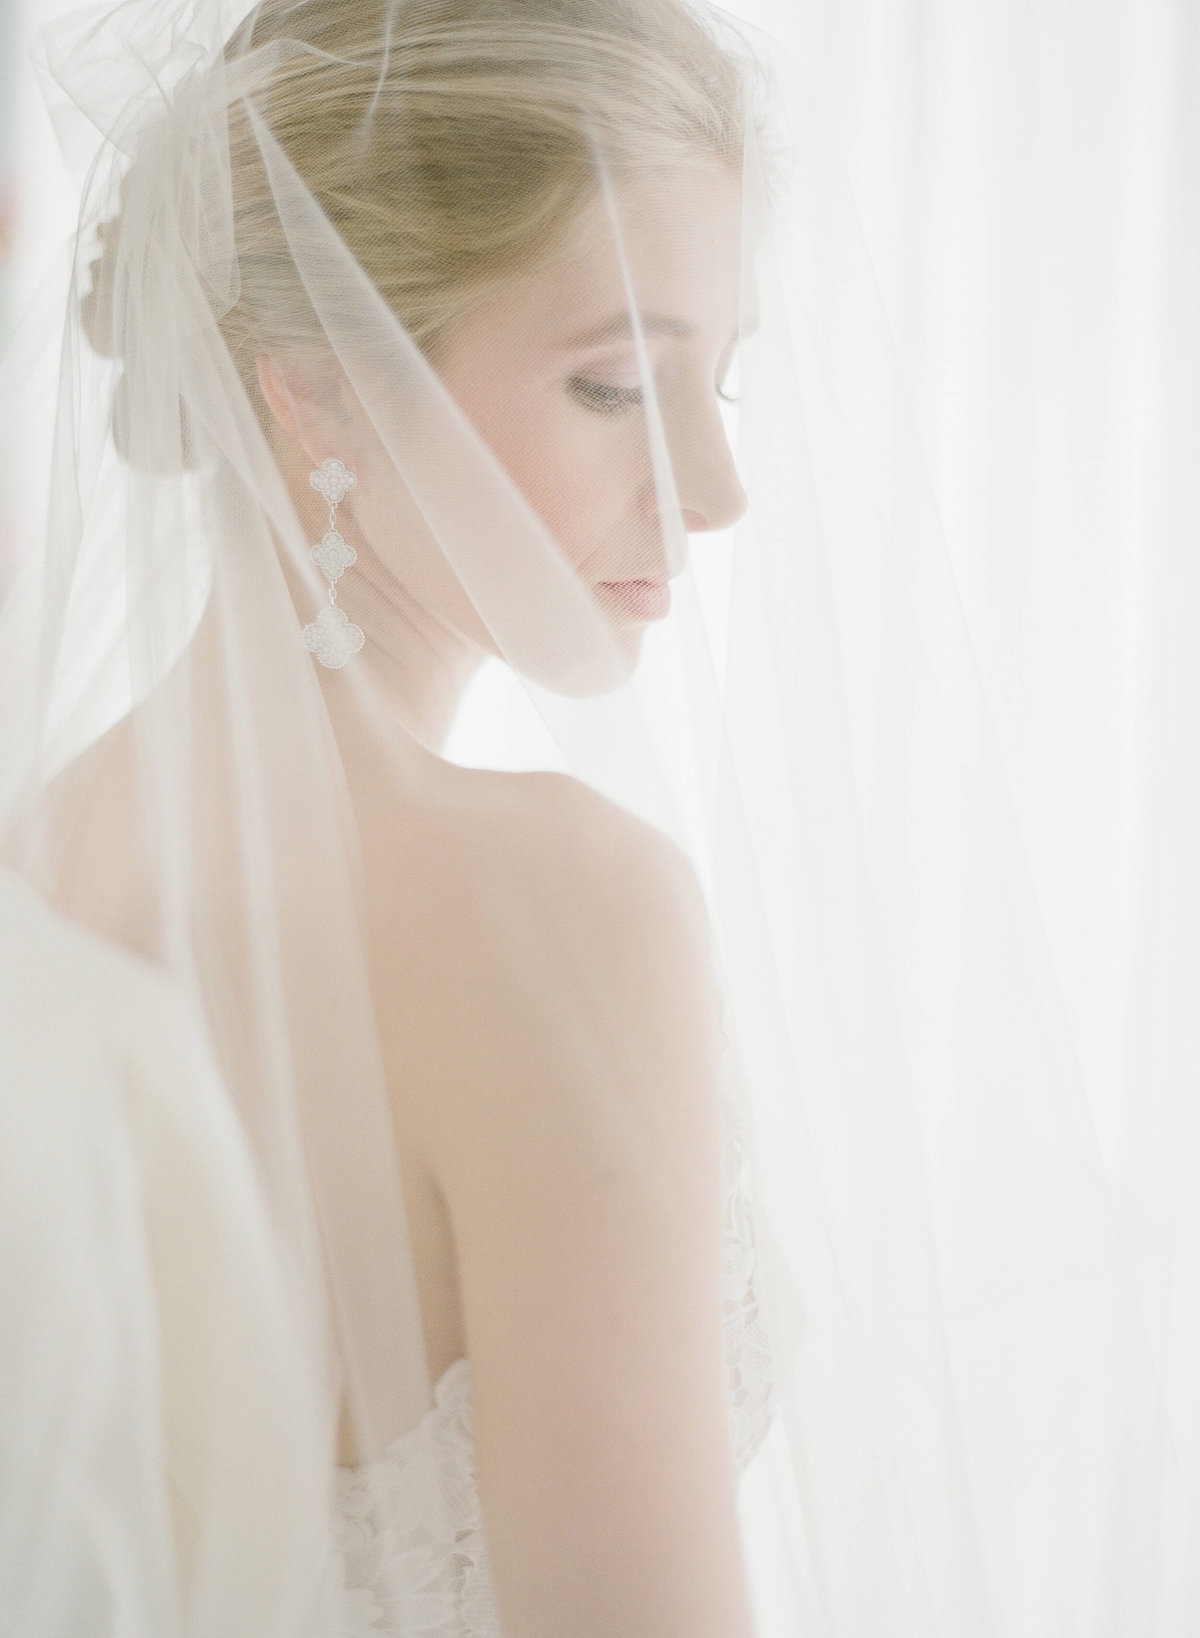 9-KTMerry-weddings-bridal-veil-portrait